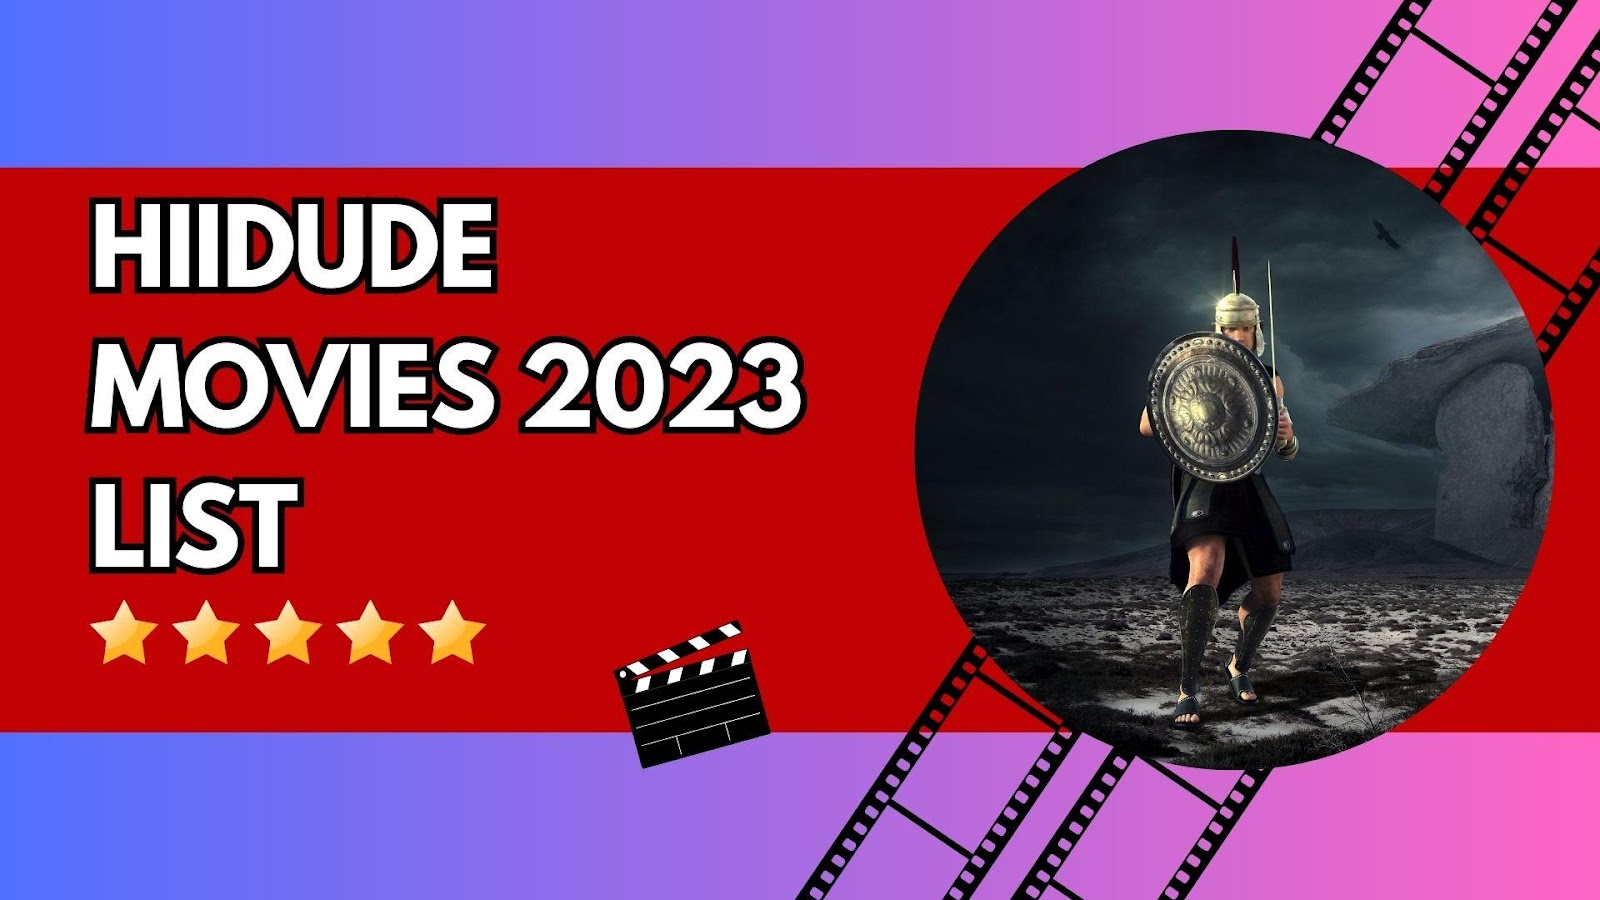 Hiidude Movies 2023 Download.jpg